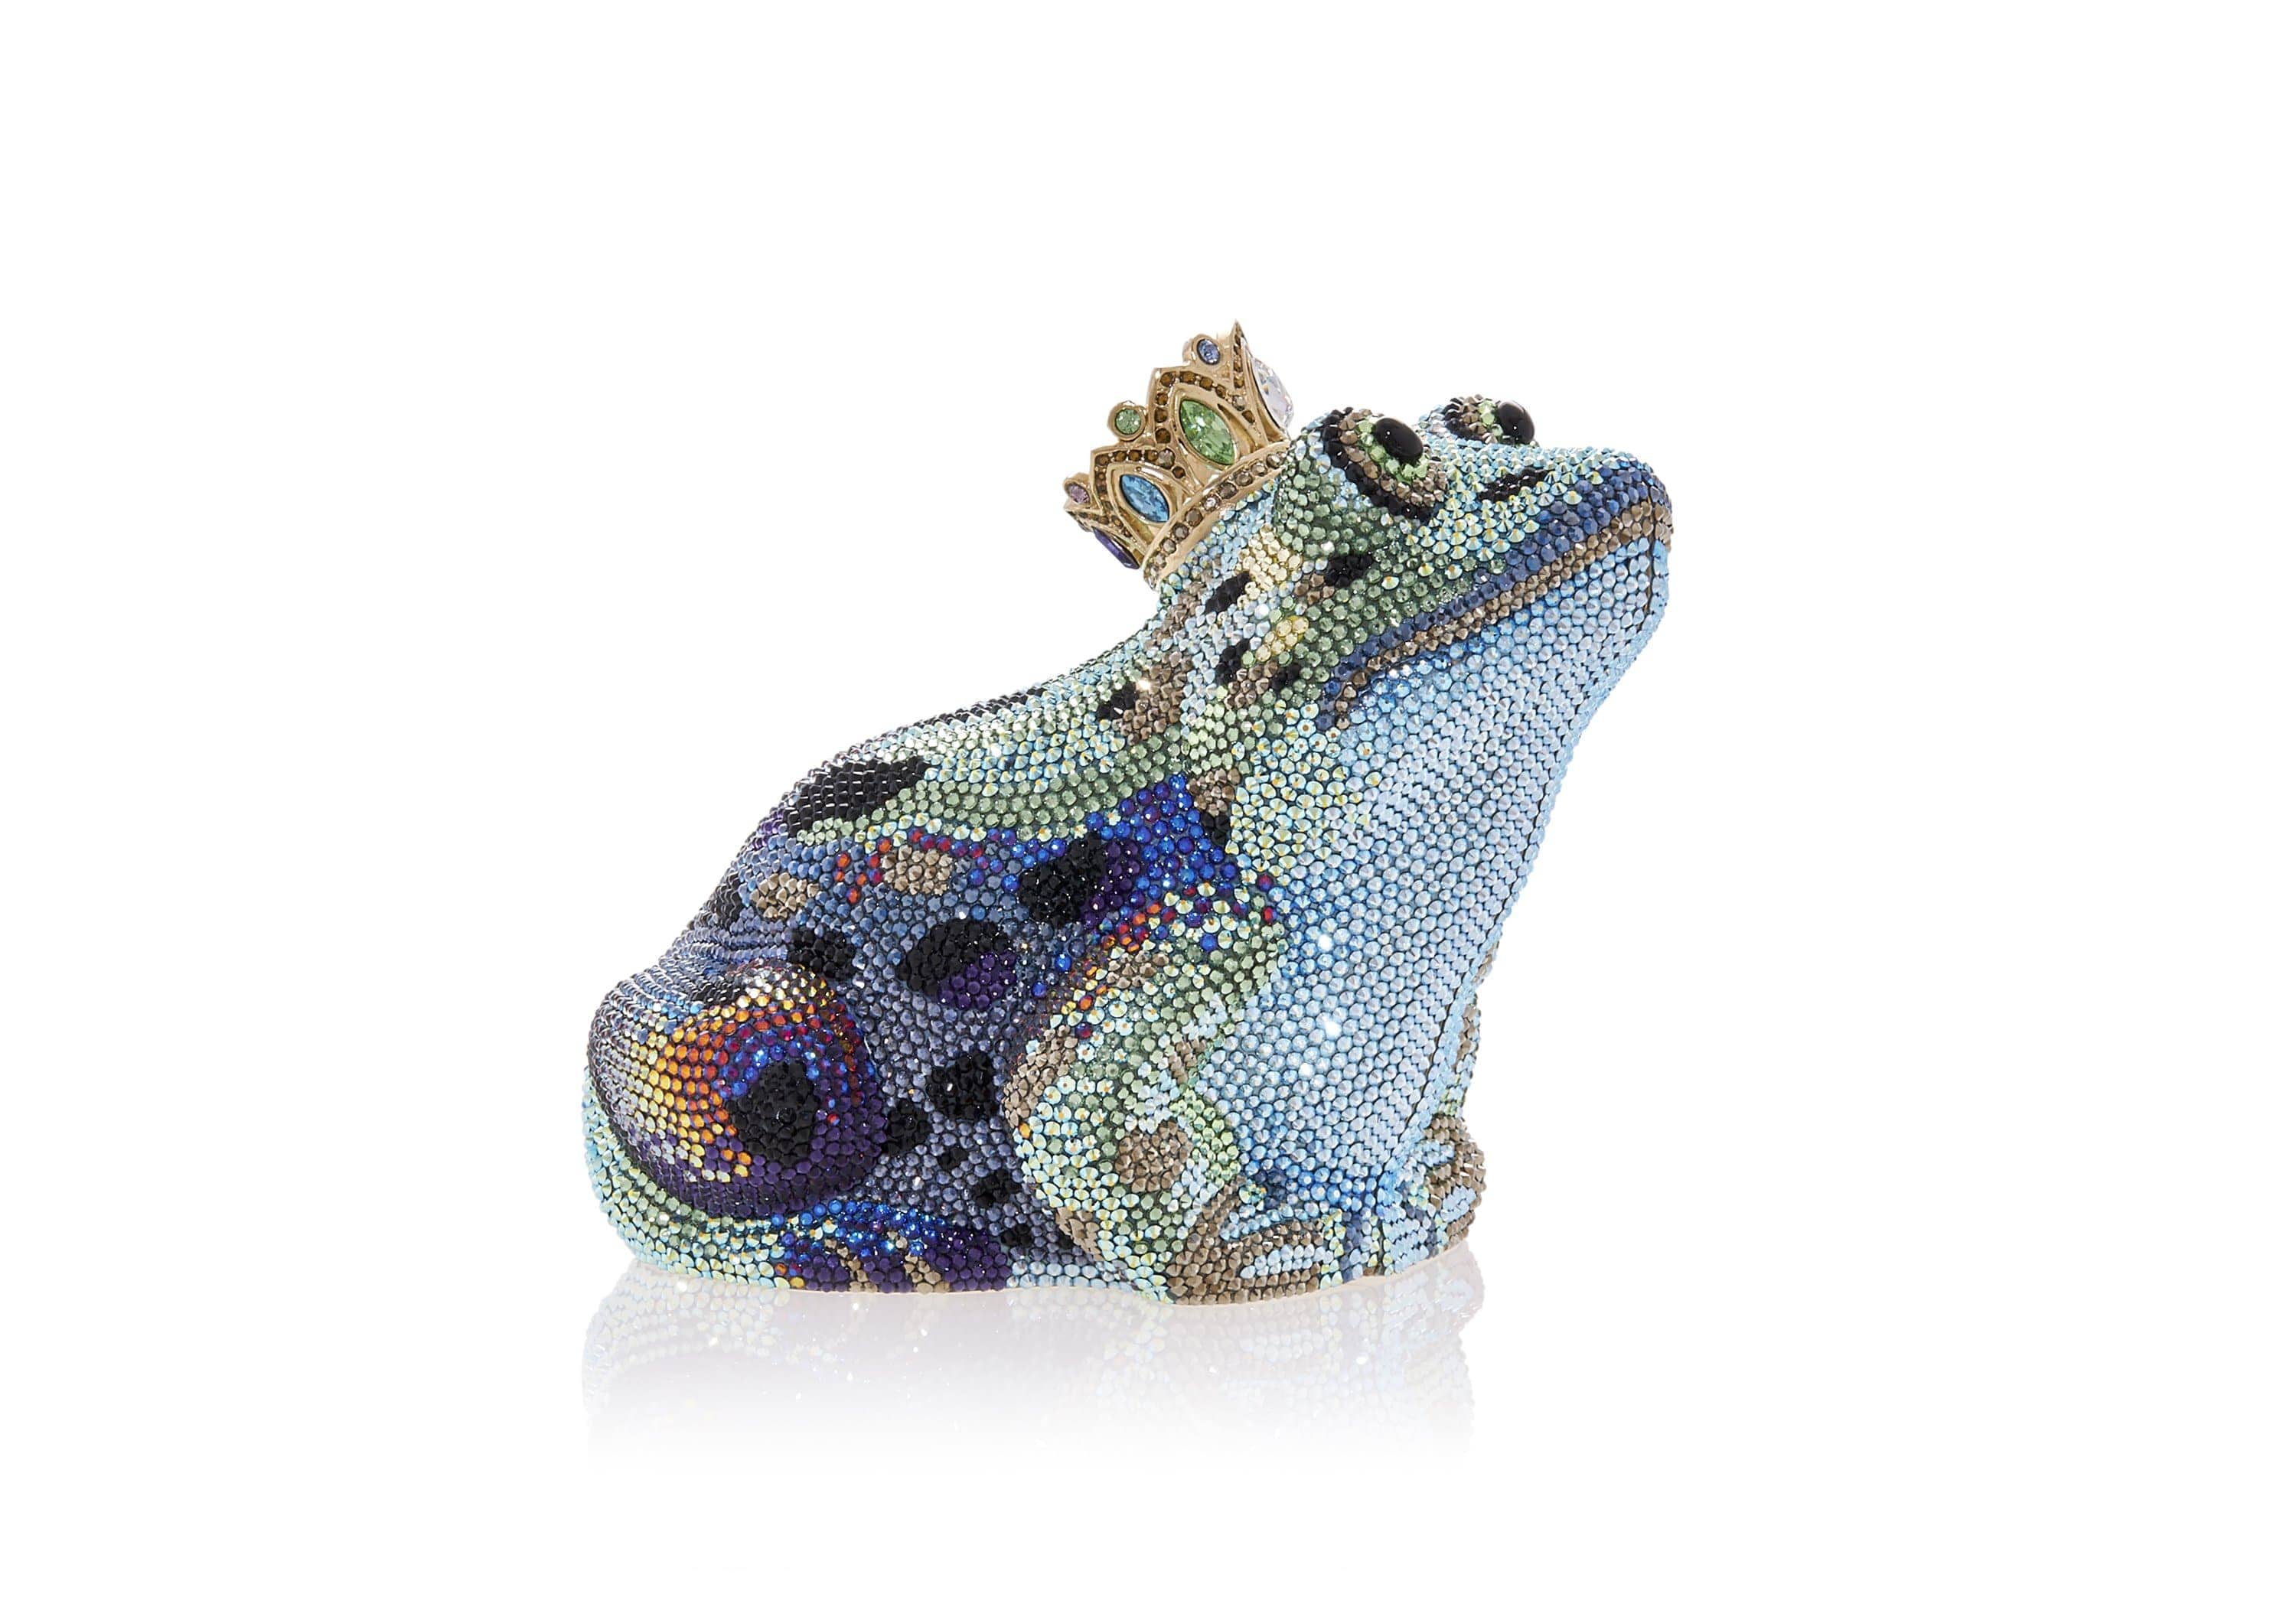 Judith Leiber Crown Jewels Crystal Clutch